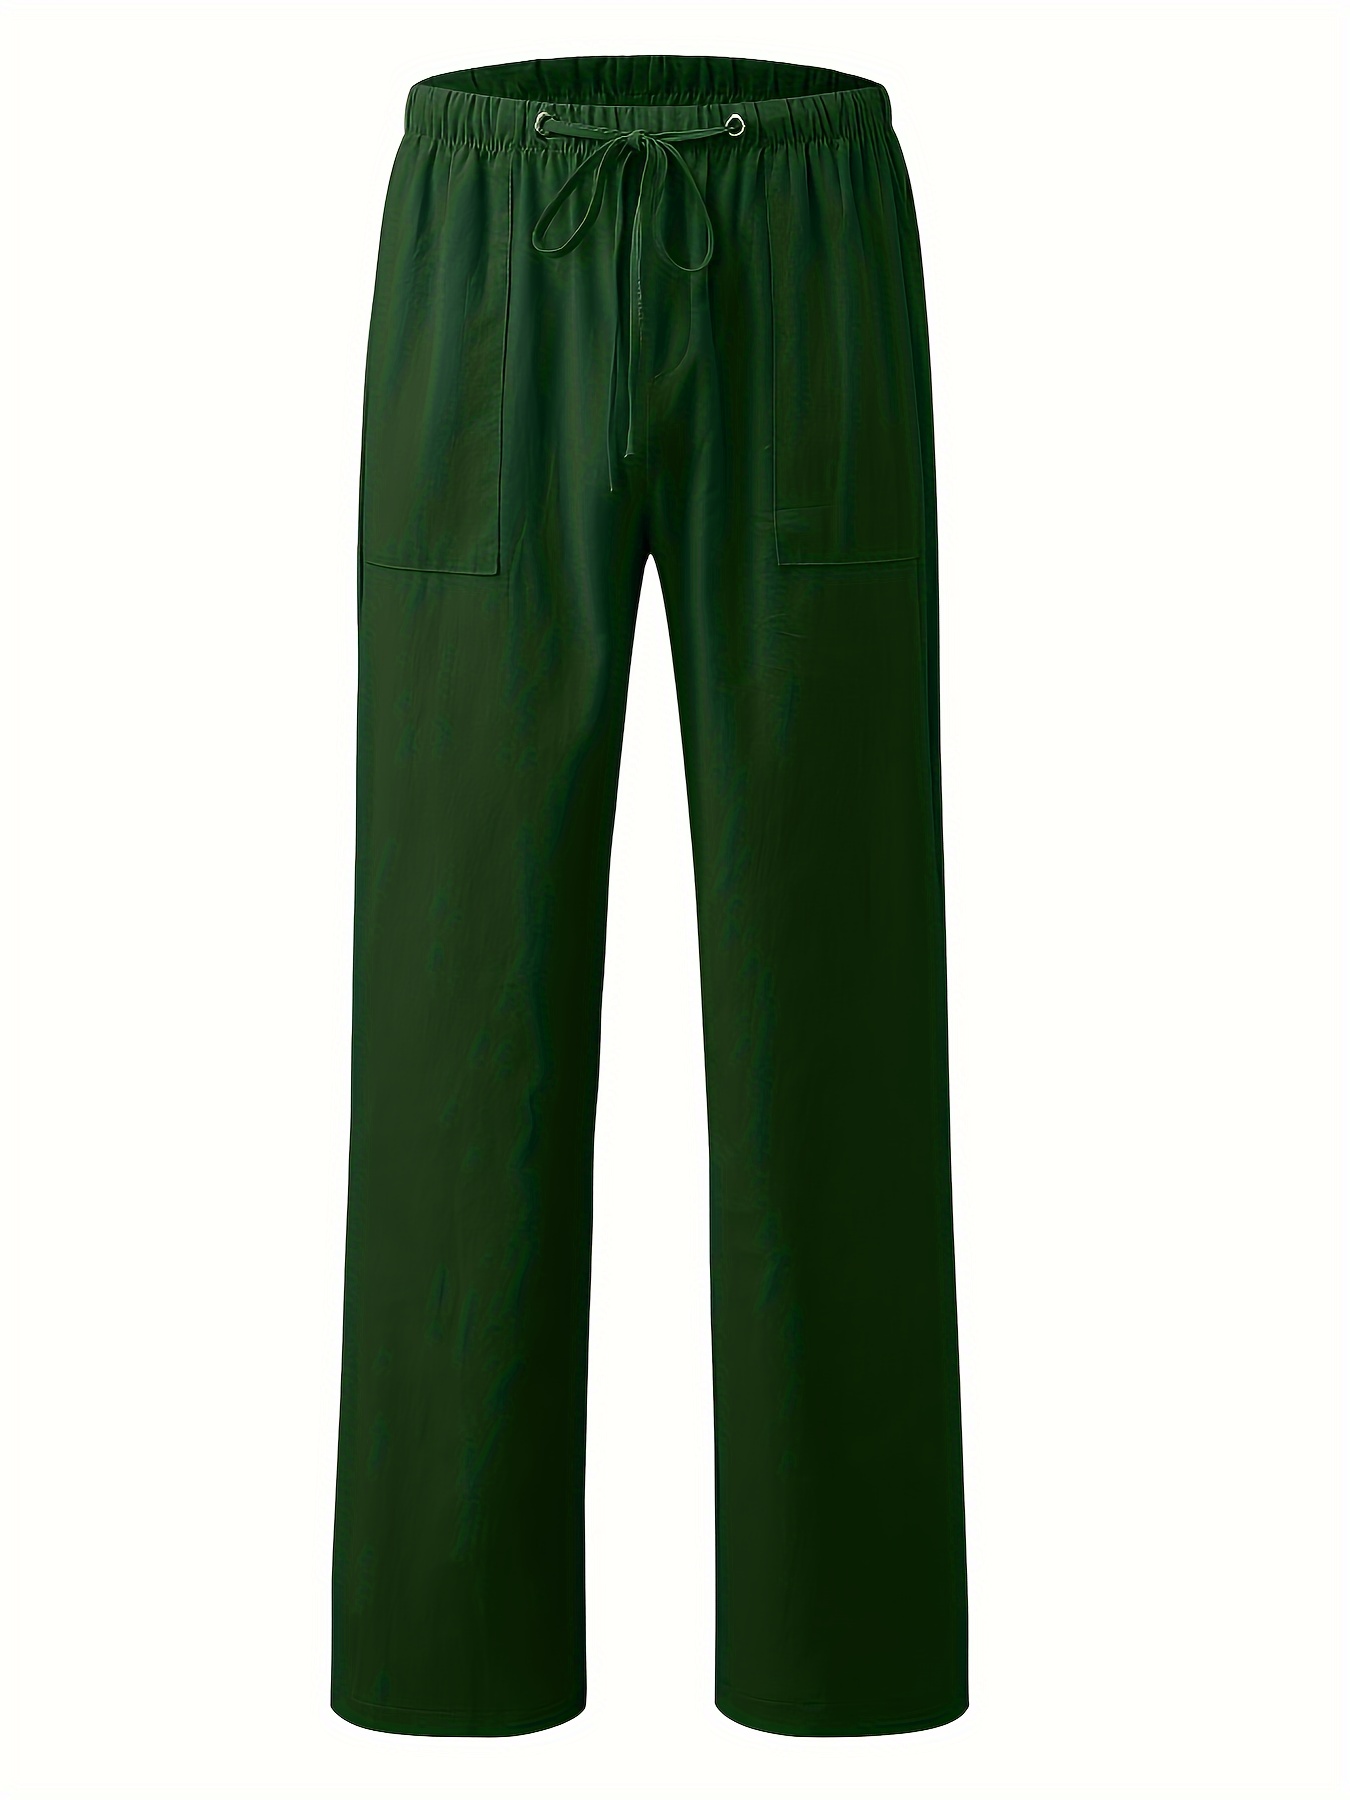 YUHAOTIN Joggers for Men Green Big and Tall Joggers for Men Men's Linen  Capri Pants Lightweight Loose 3/4 Shorts Drawstring Elastic Waist Baggy  Wide Leg Casual Beach Yoga Trousers 